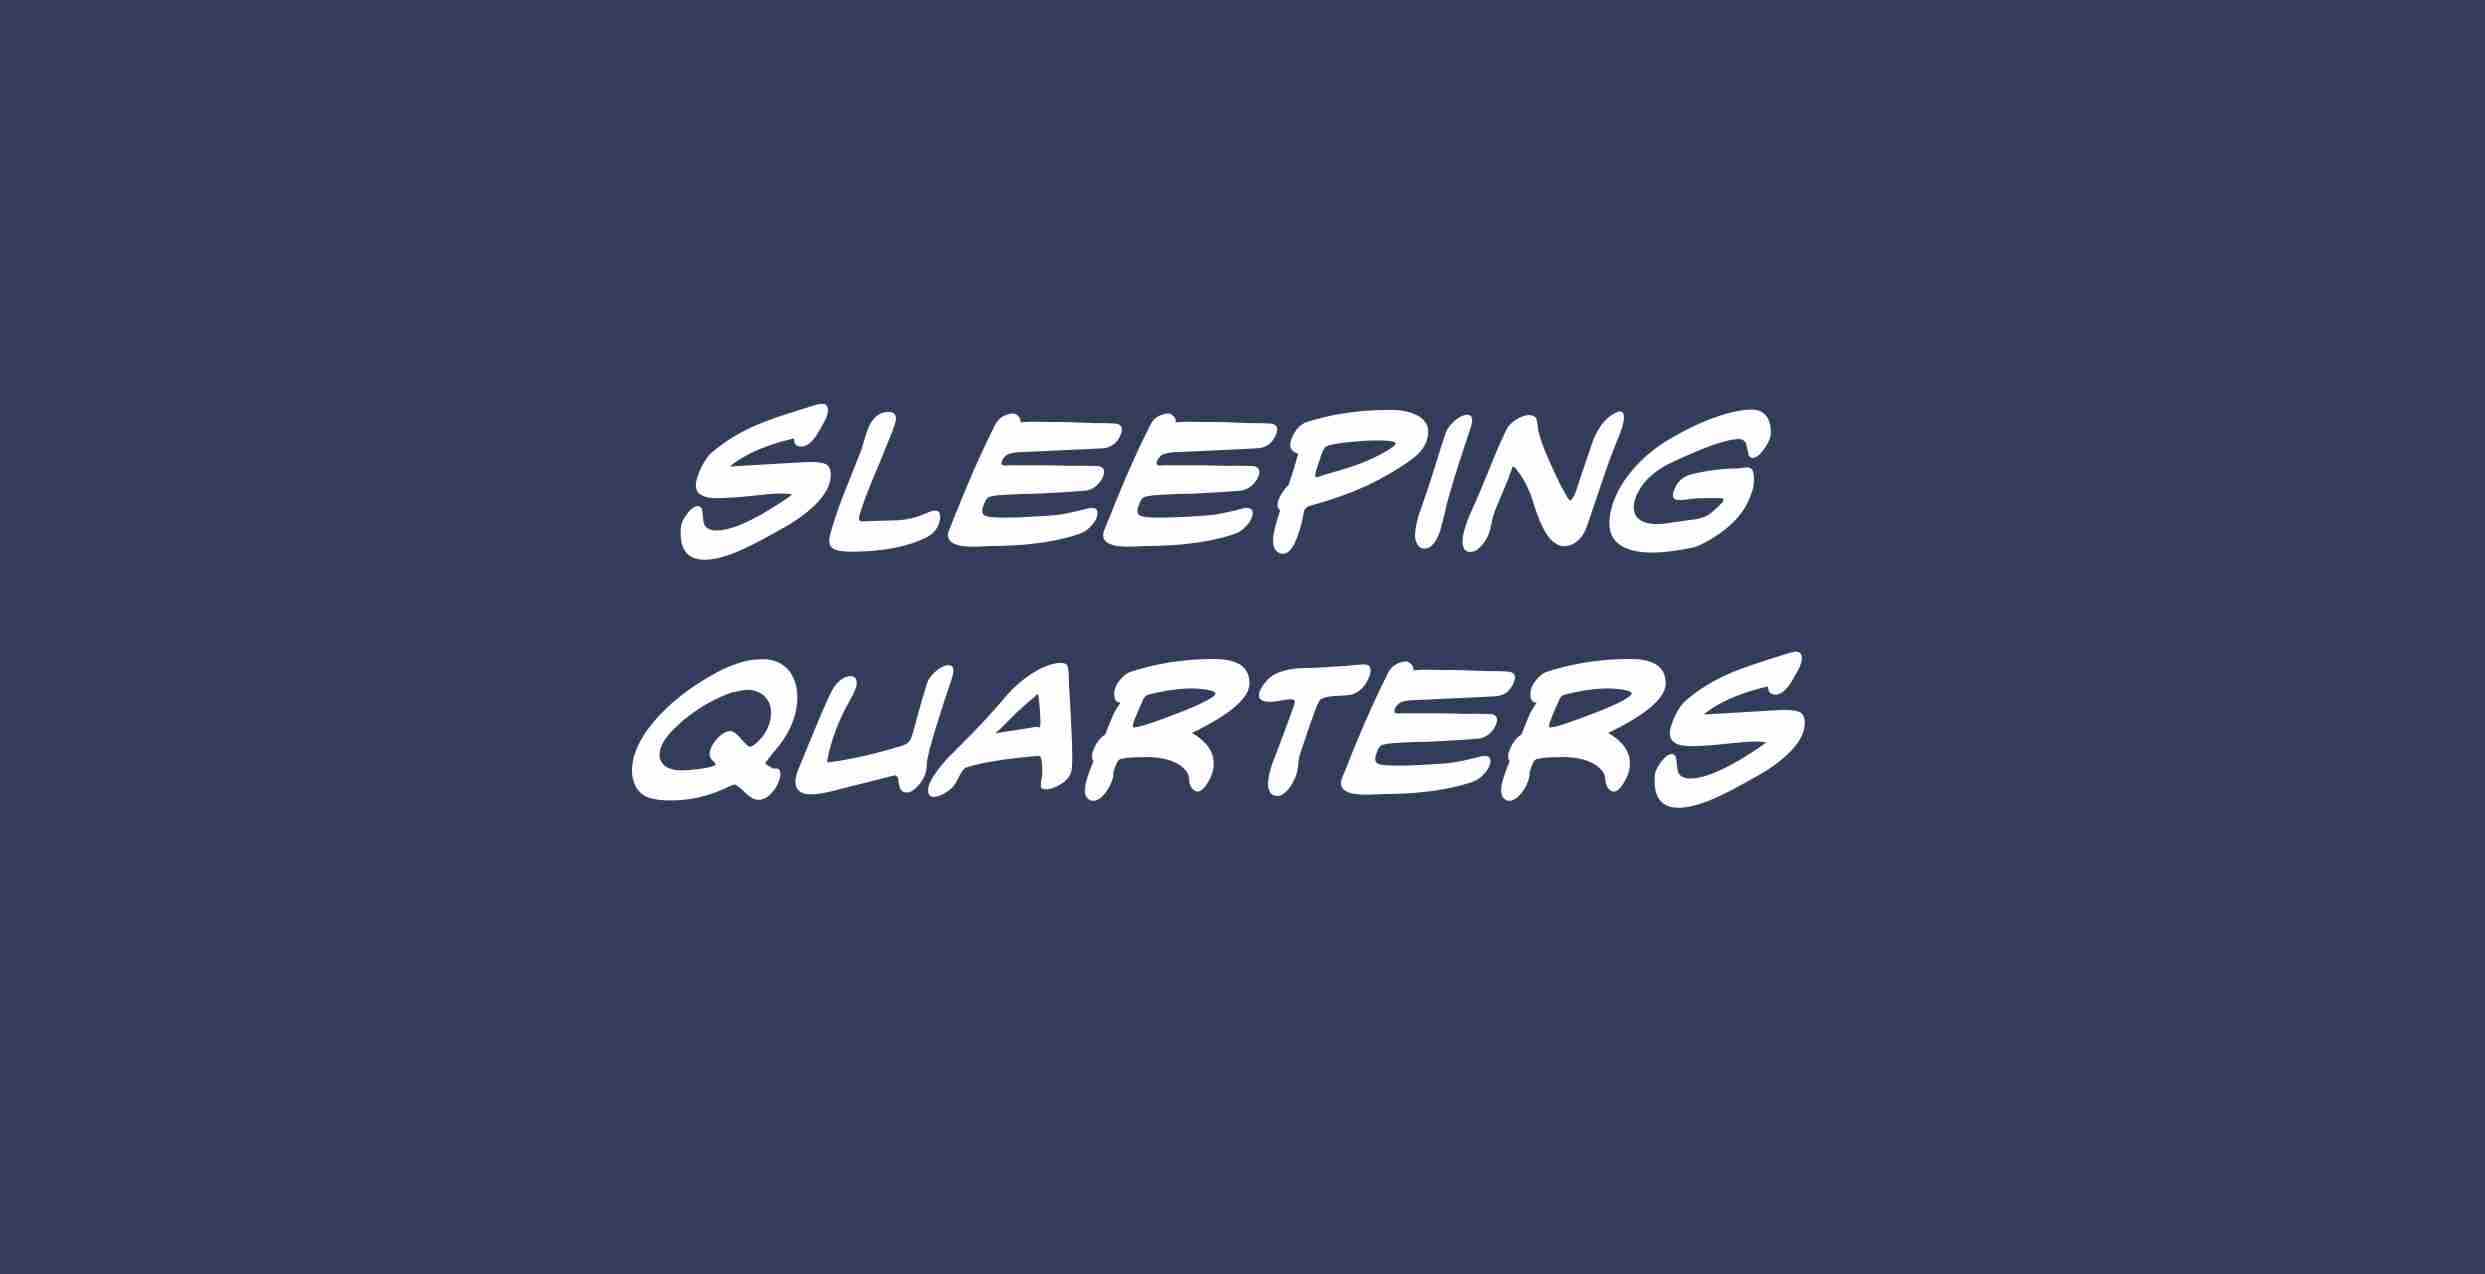 Sleeping quarters